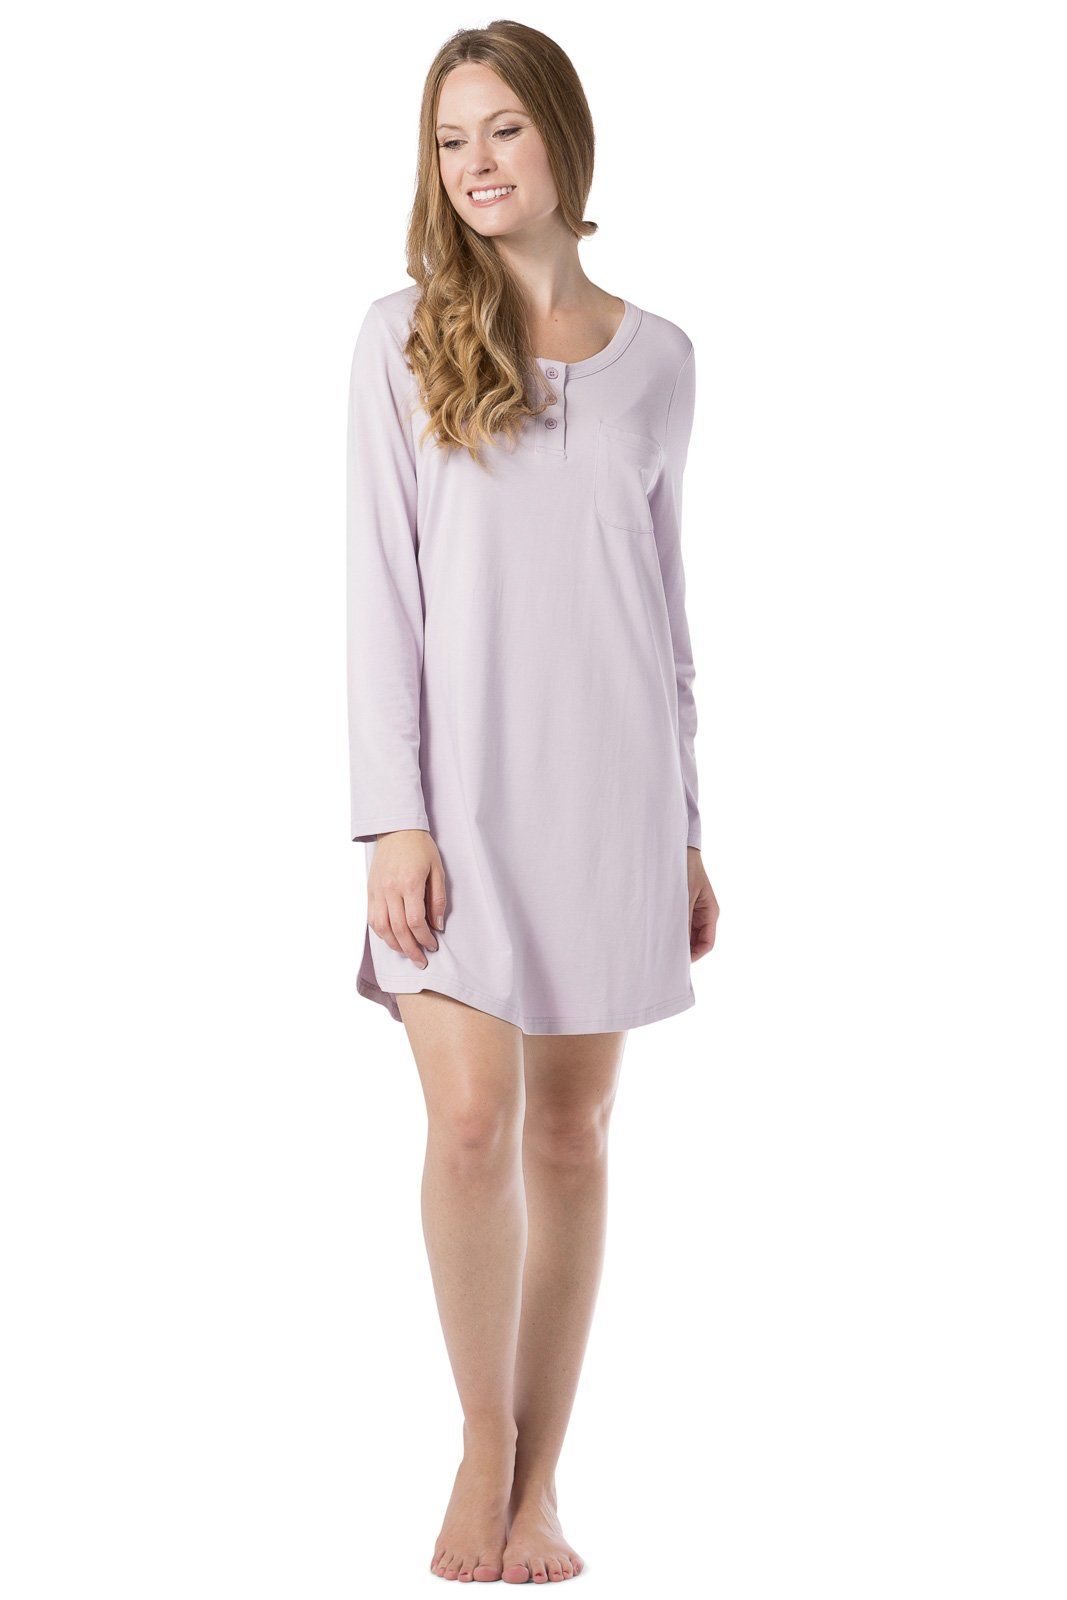 Women's Nightgowns & Sleepshirts